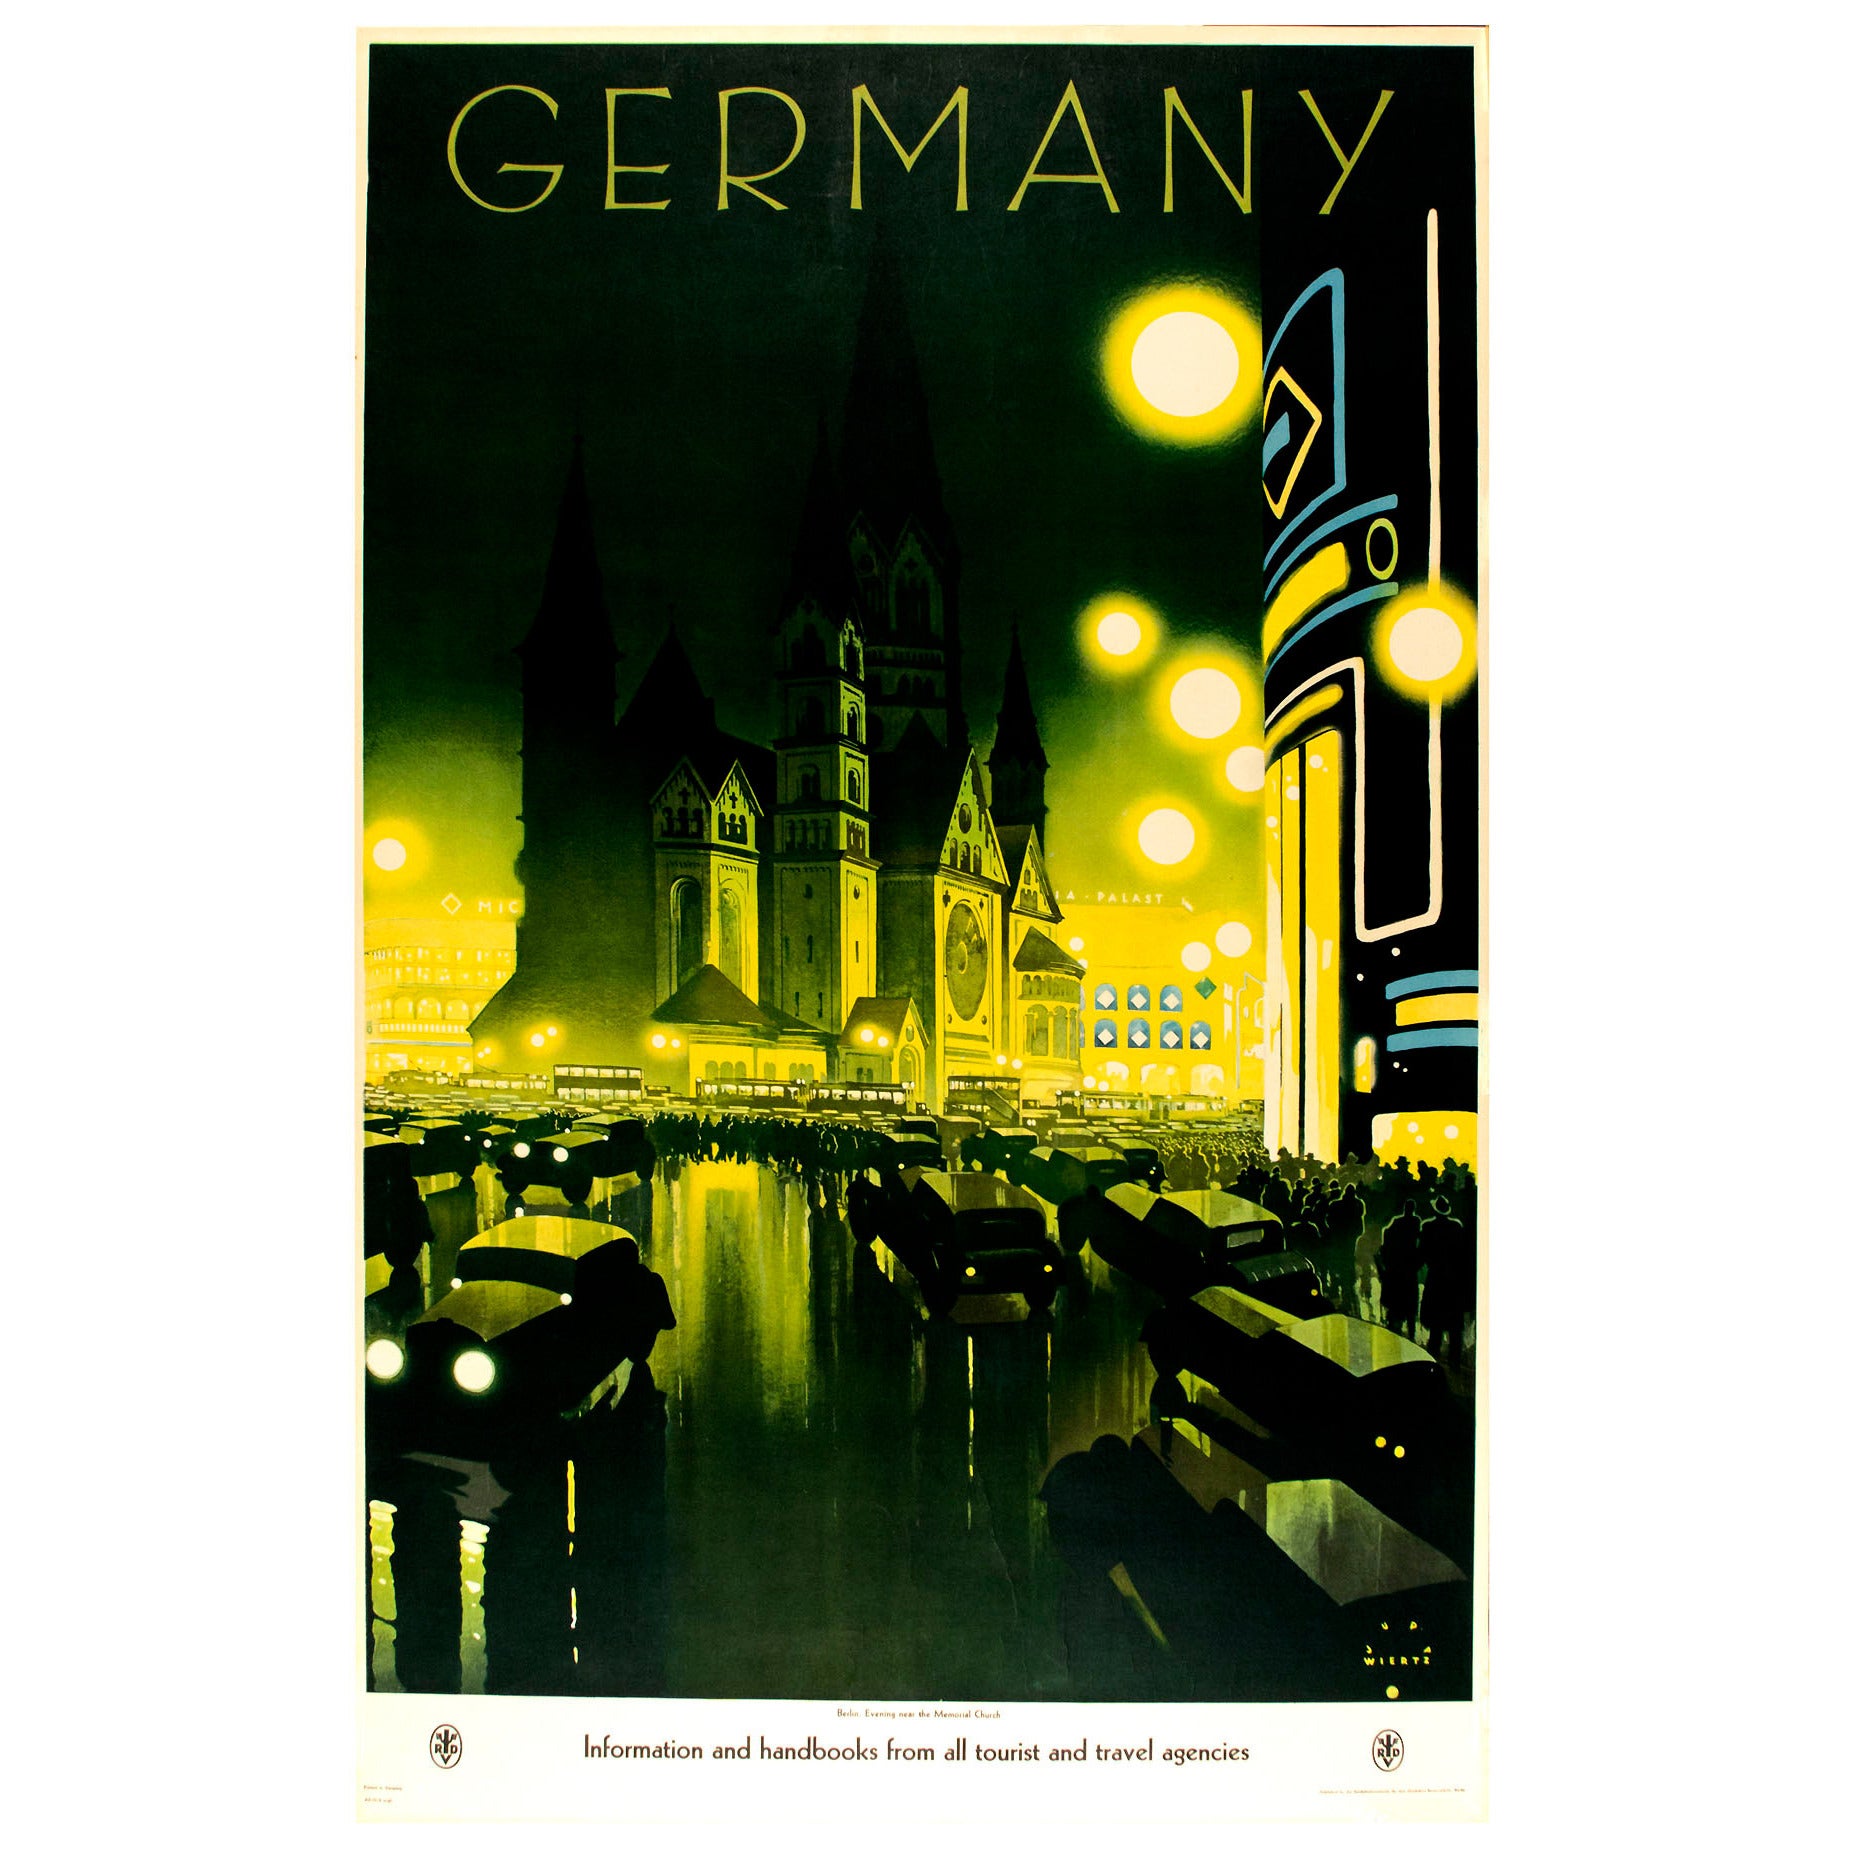 Original Art Deco Travel Poster for Germany